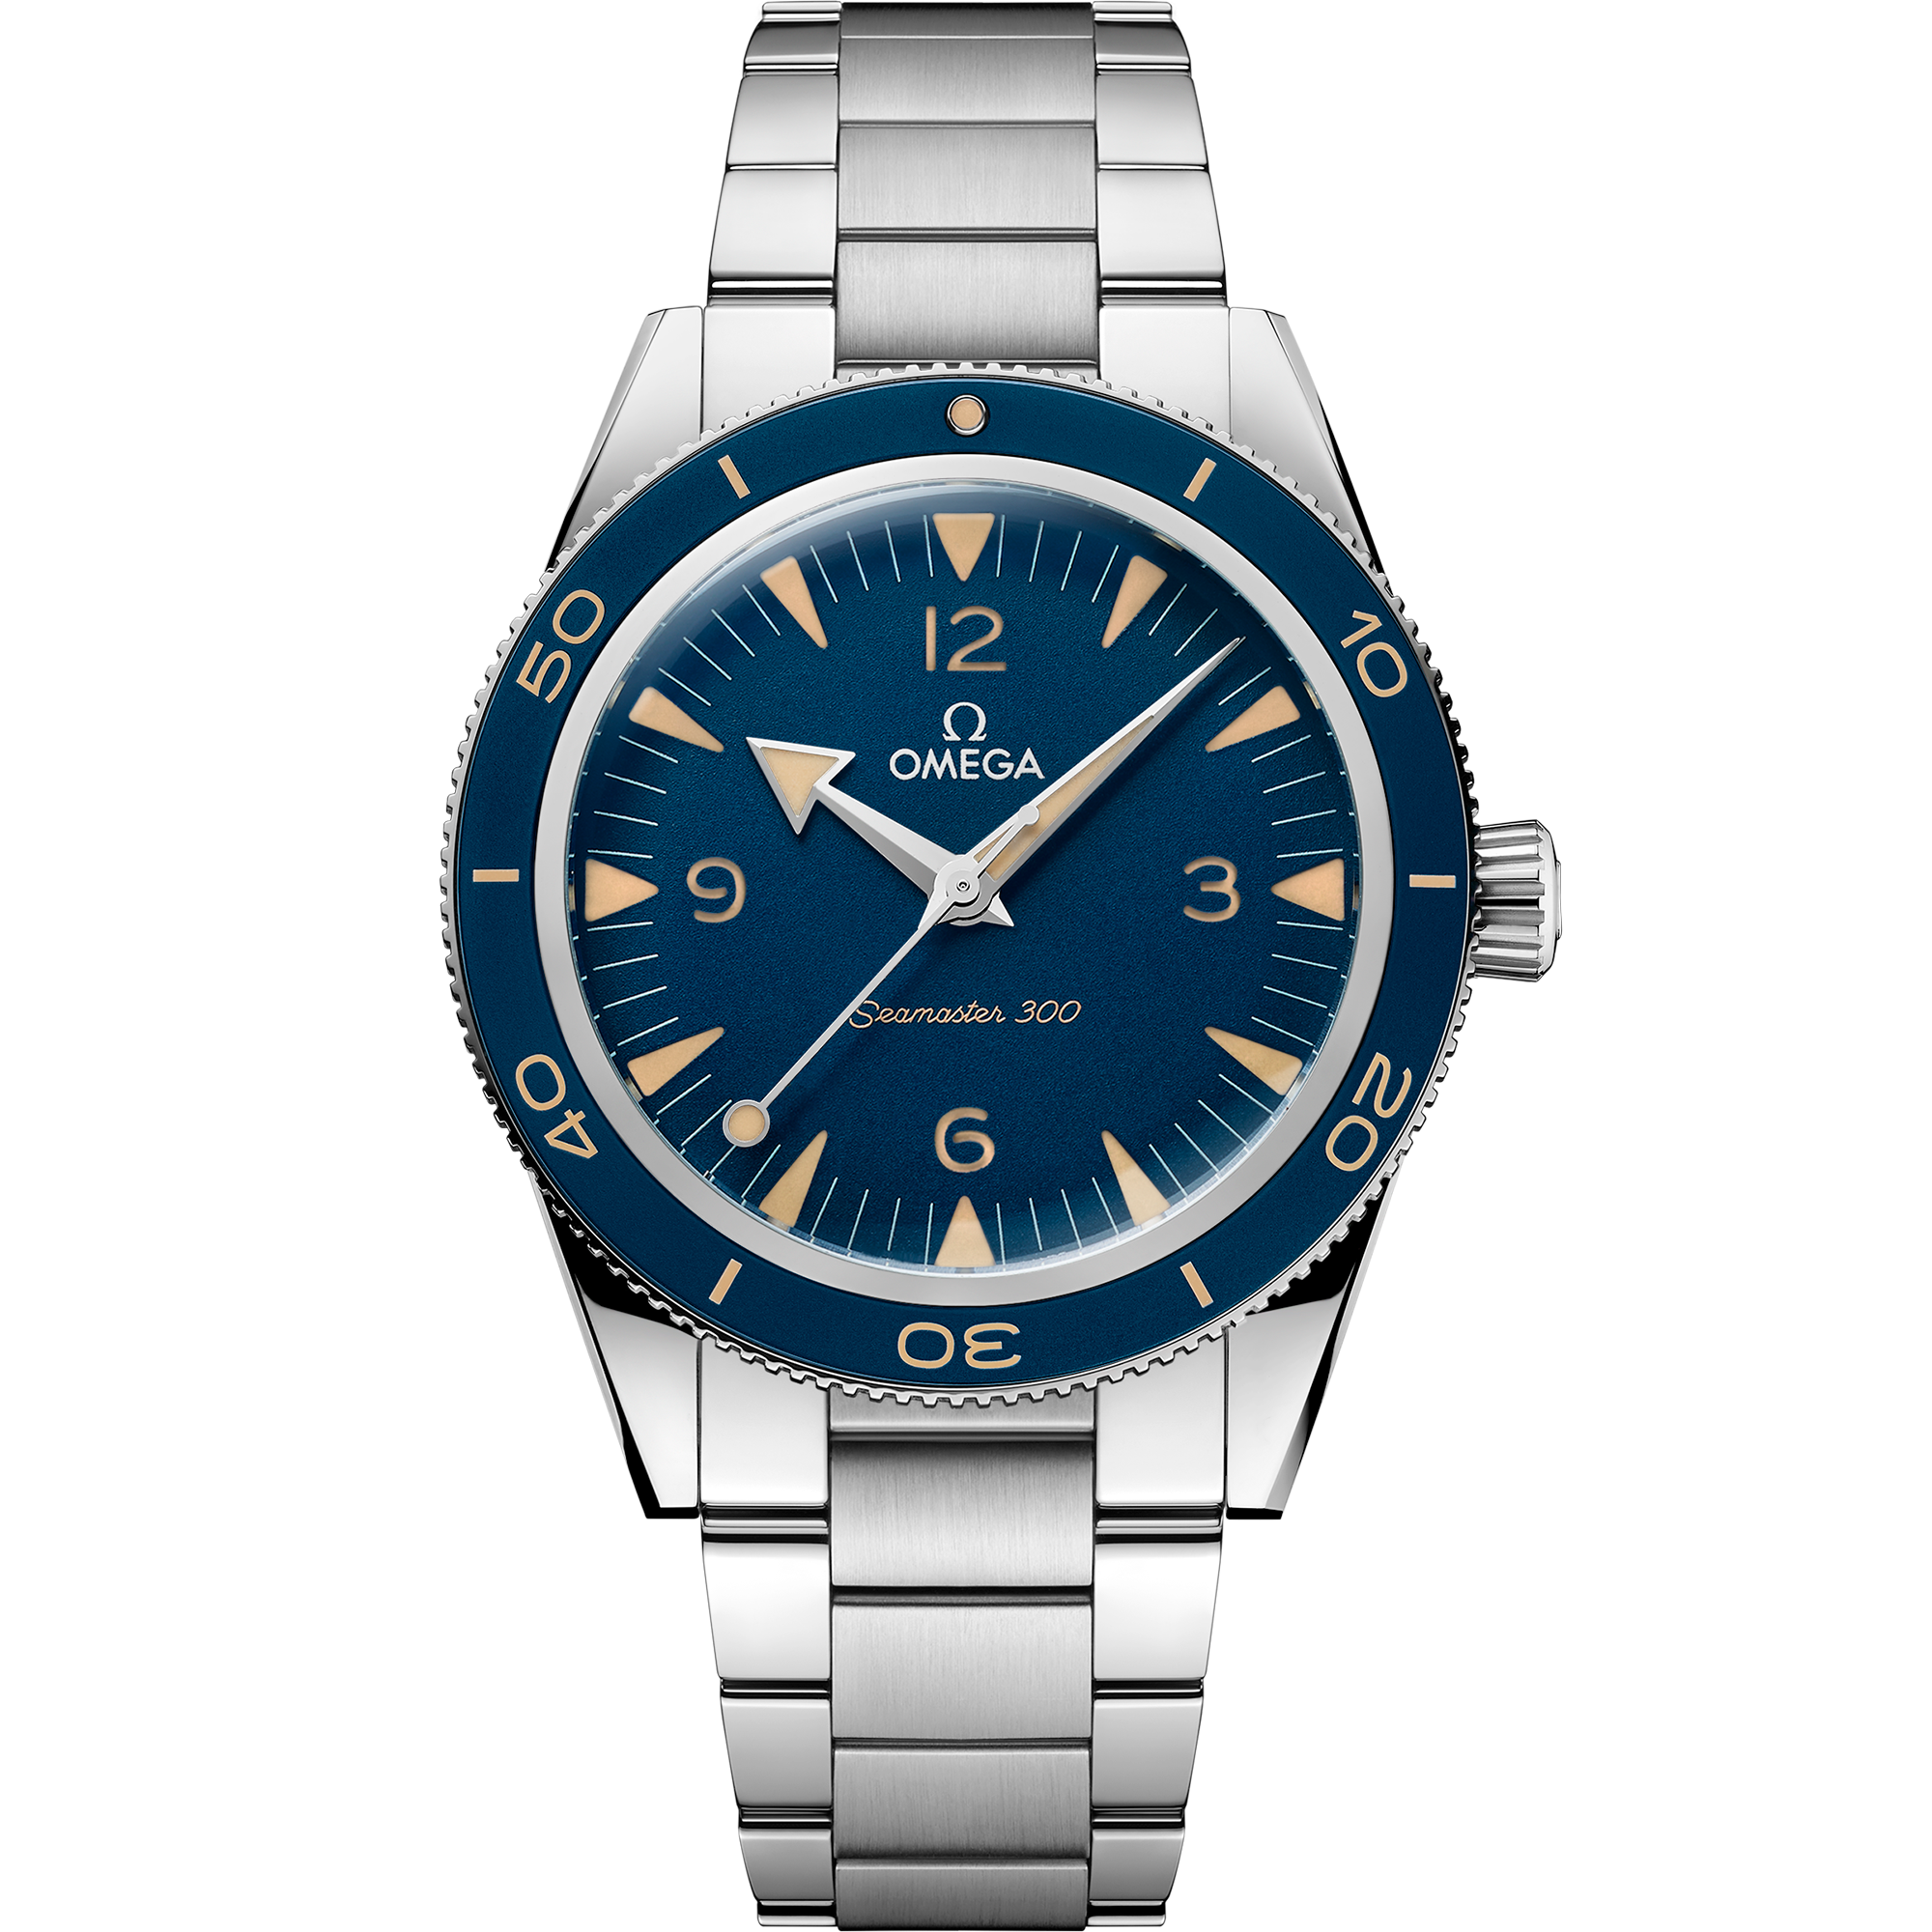 Seamaster 300 Seamaster Steel Chronometer Watch 234.30.41.21.03.001